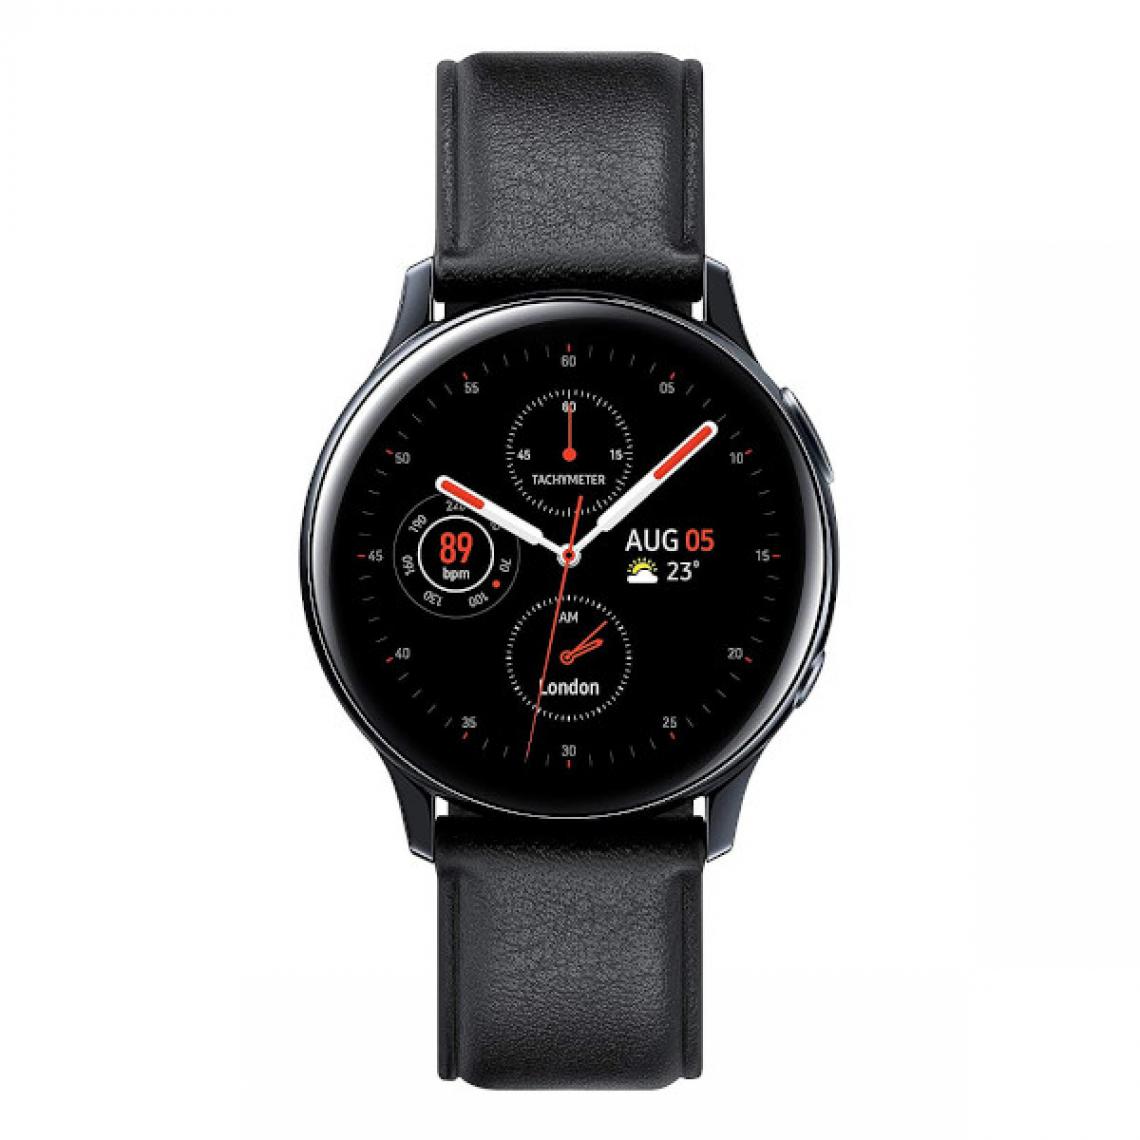 Samsung - Samsung Galaxy Watch Active 2 40mm Noir (Stainless Steel Black) R830 - Montre connectée